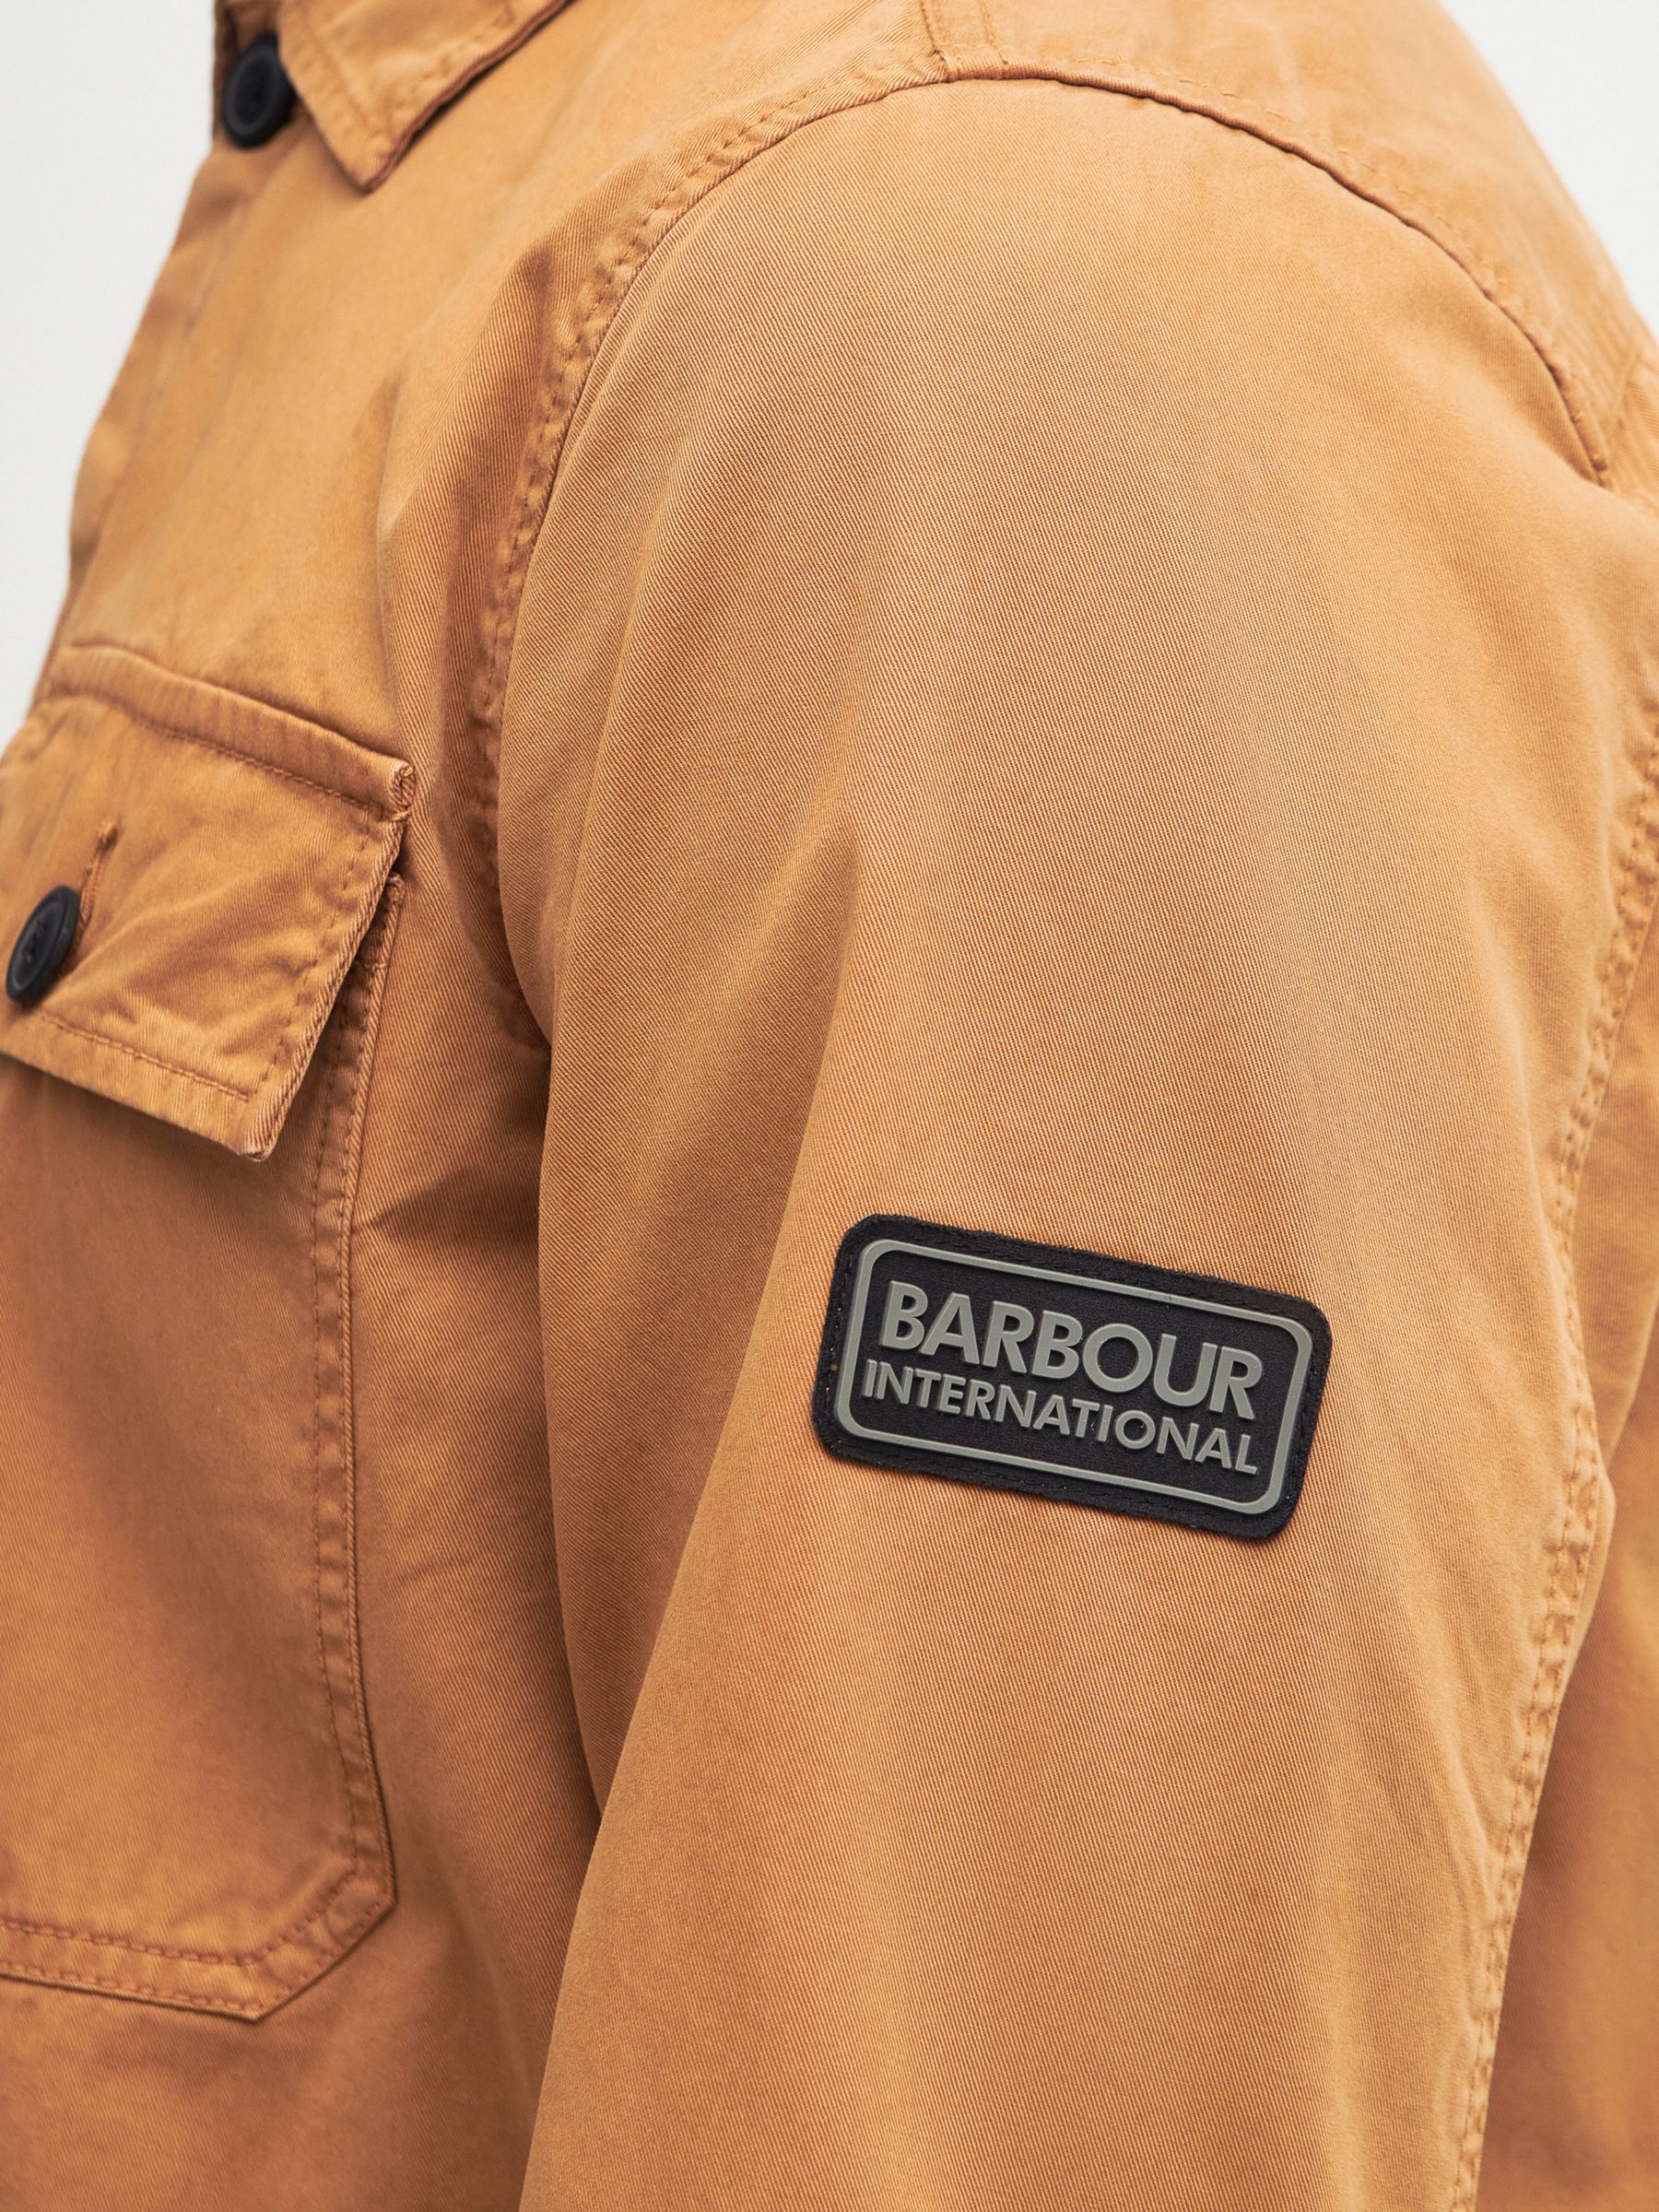 Buy Barbour International Adey Cotton Overshirt Online at johnlewis.com